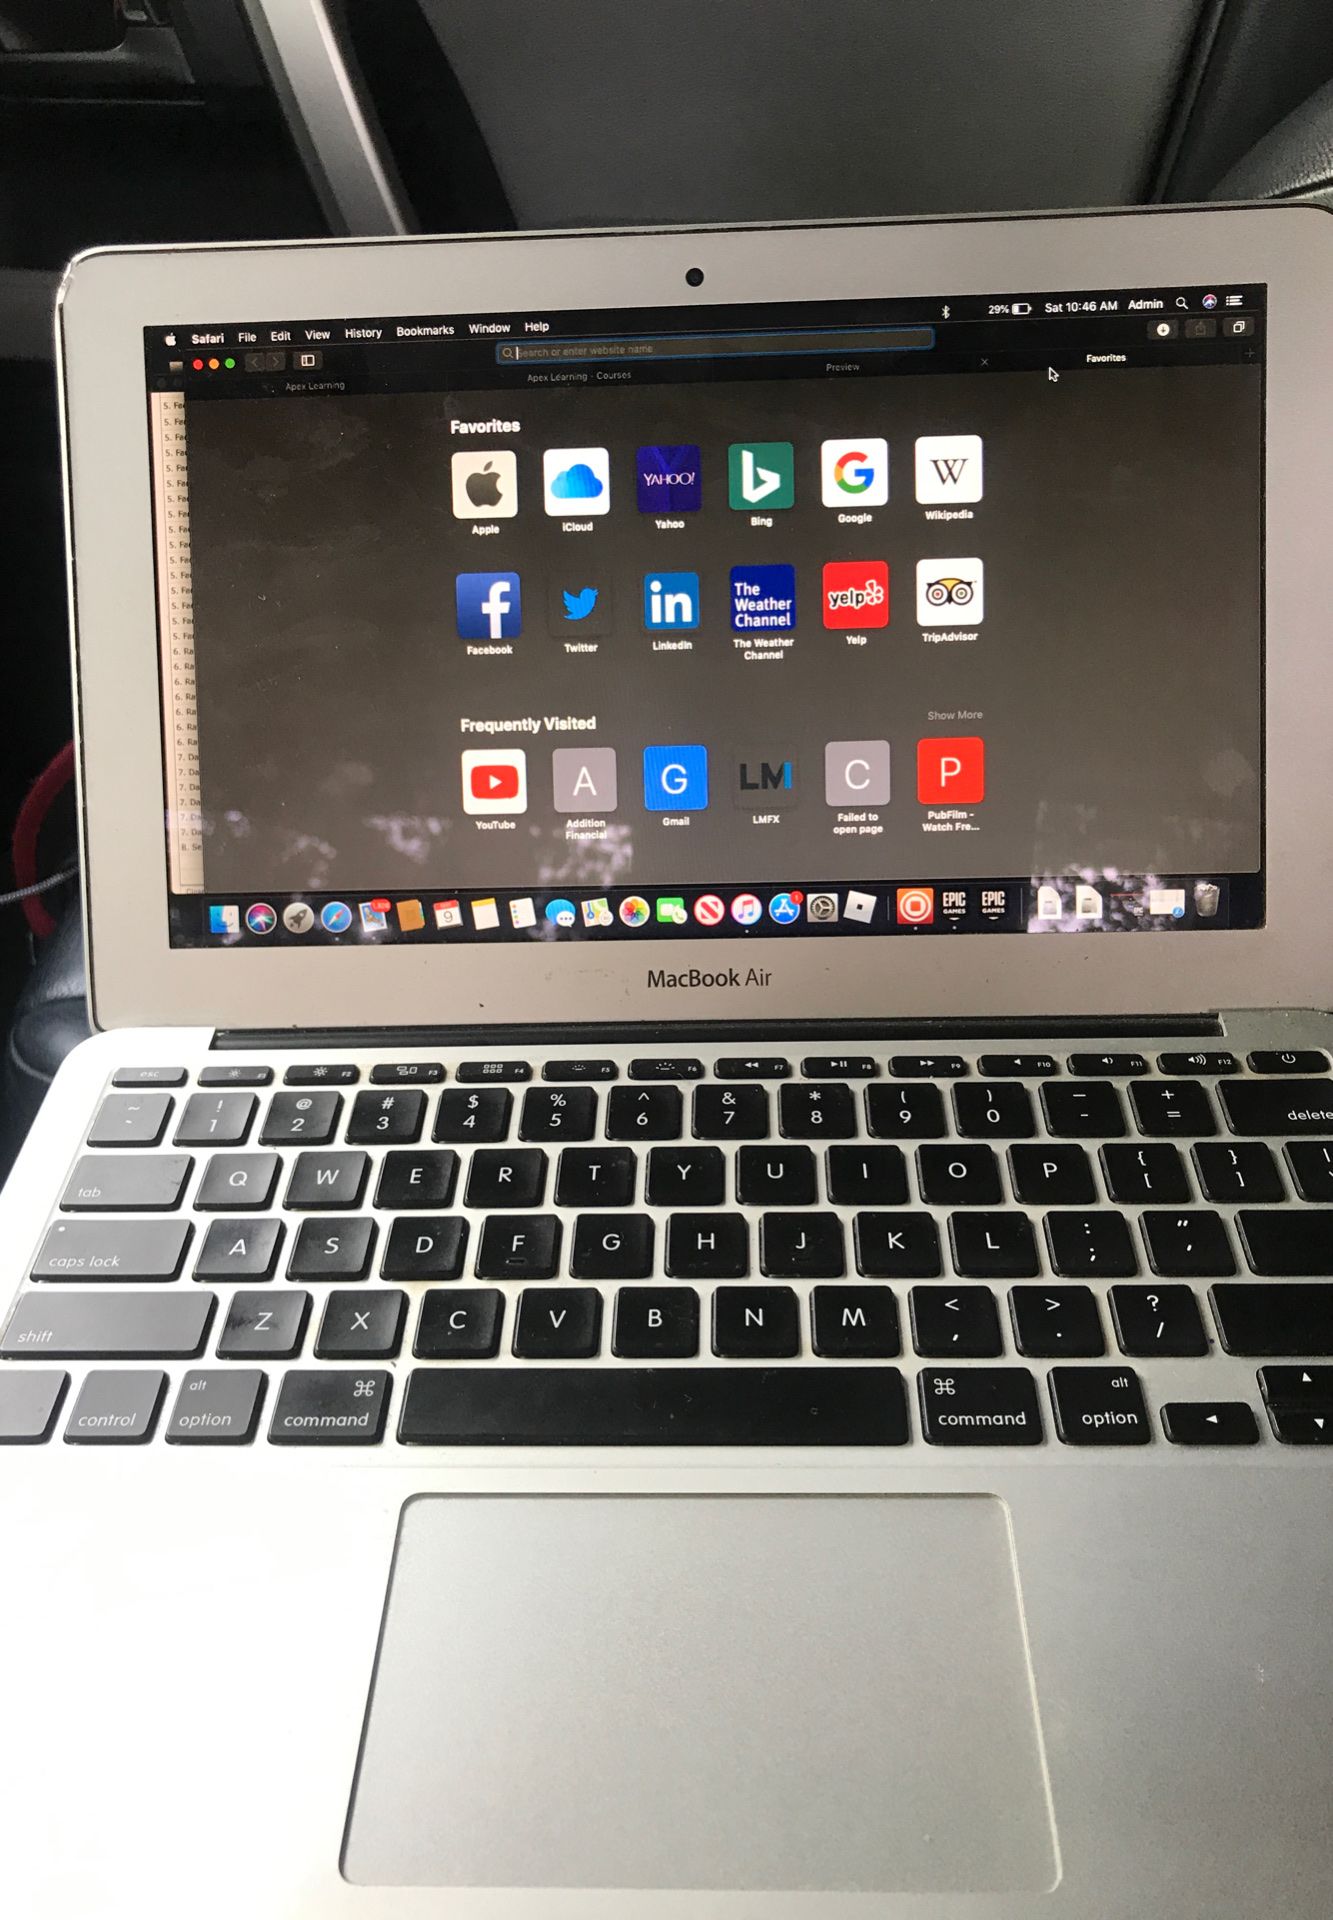 MacBook Air laptop